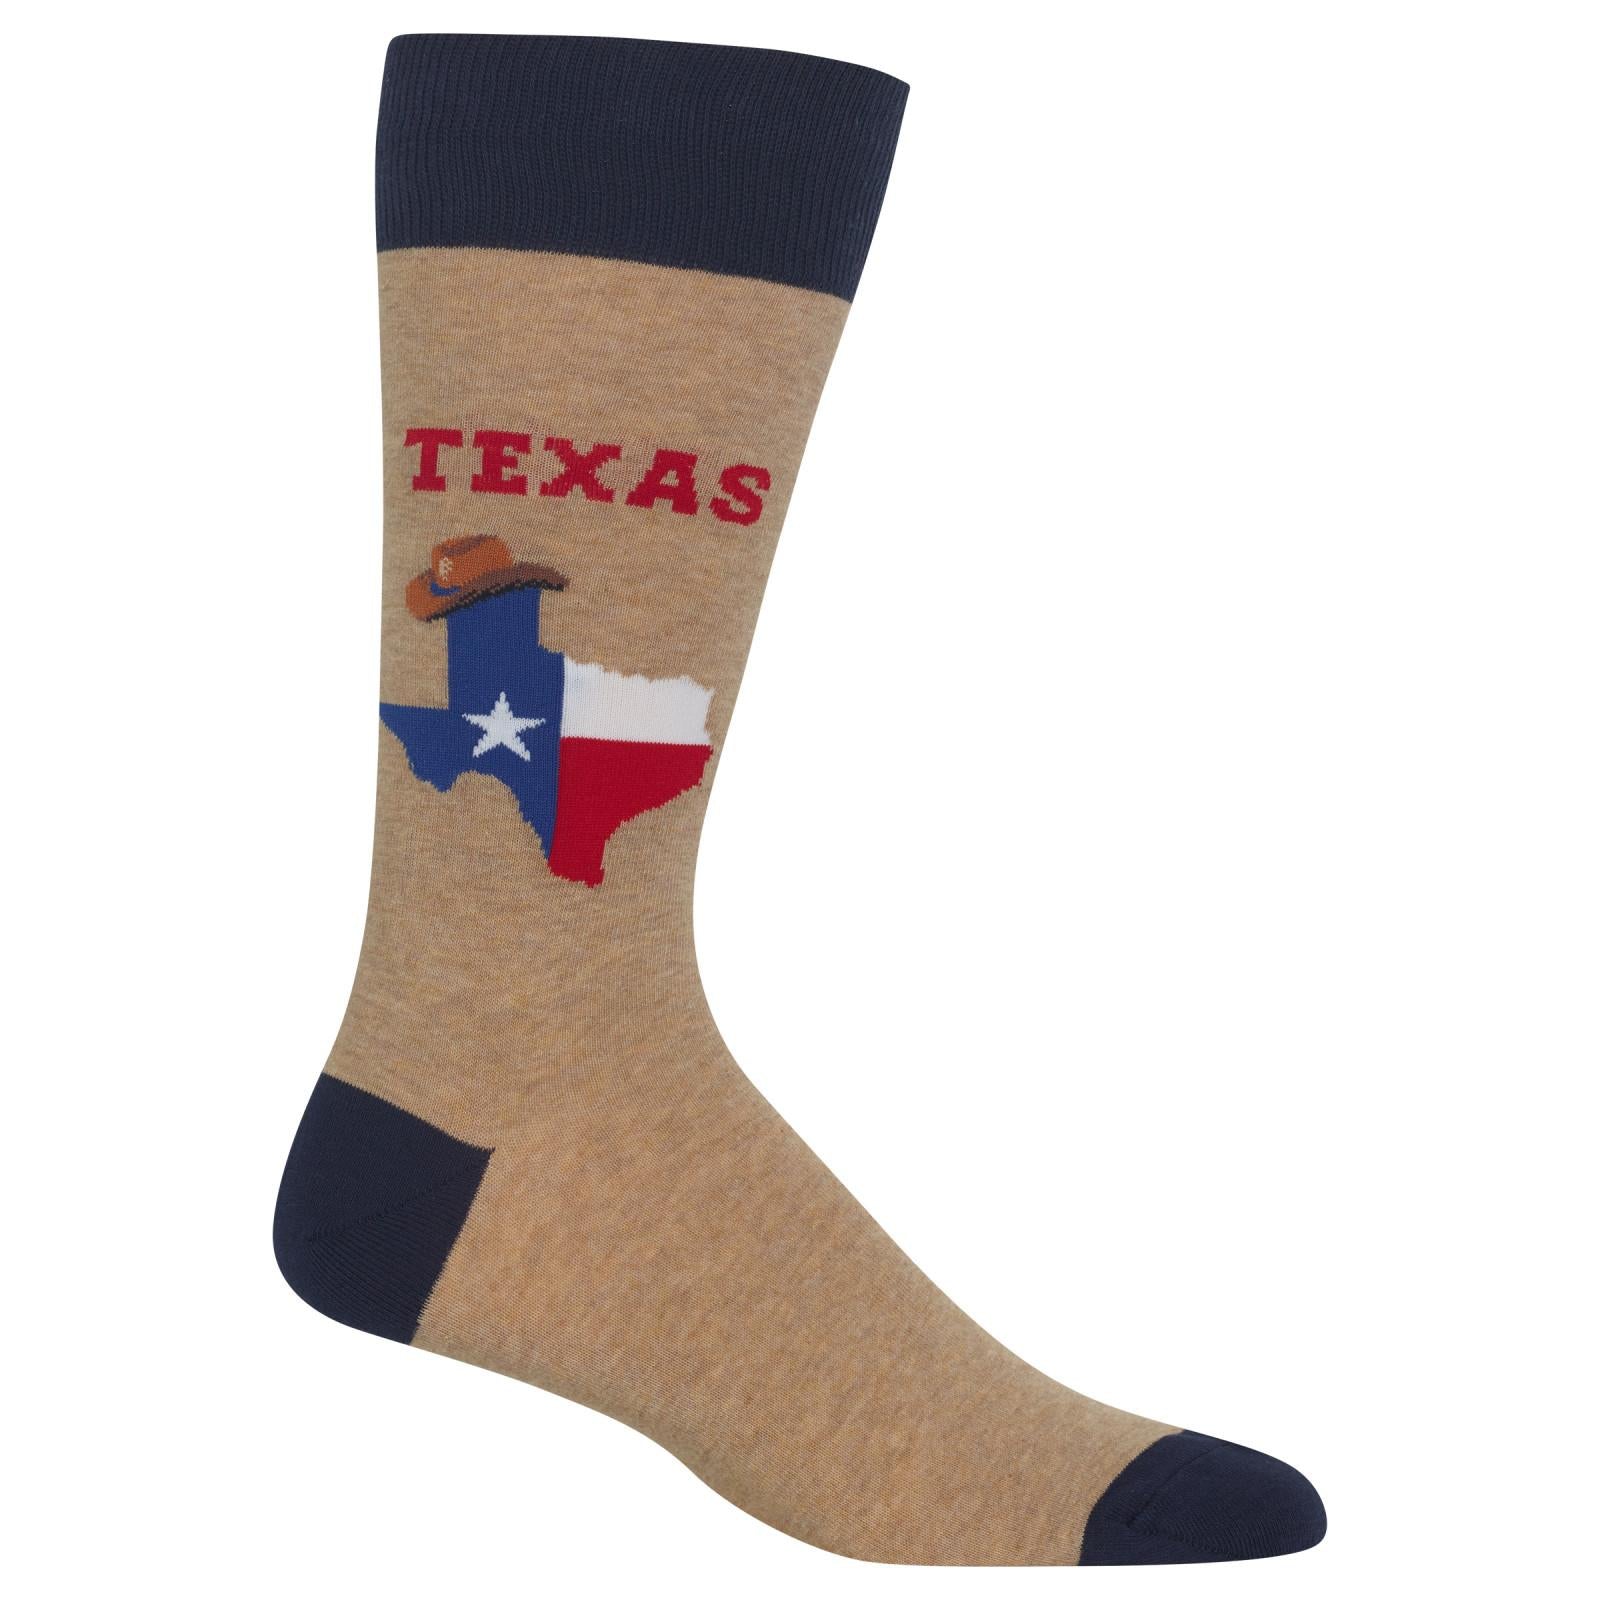 State of Texas Socks